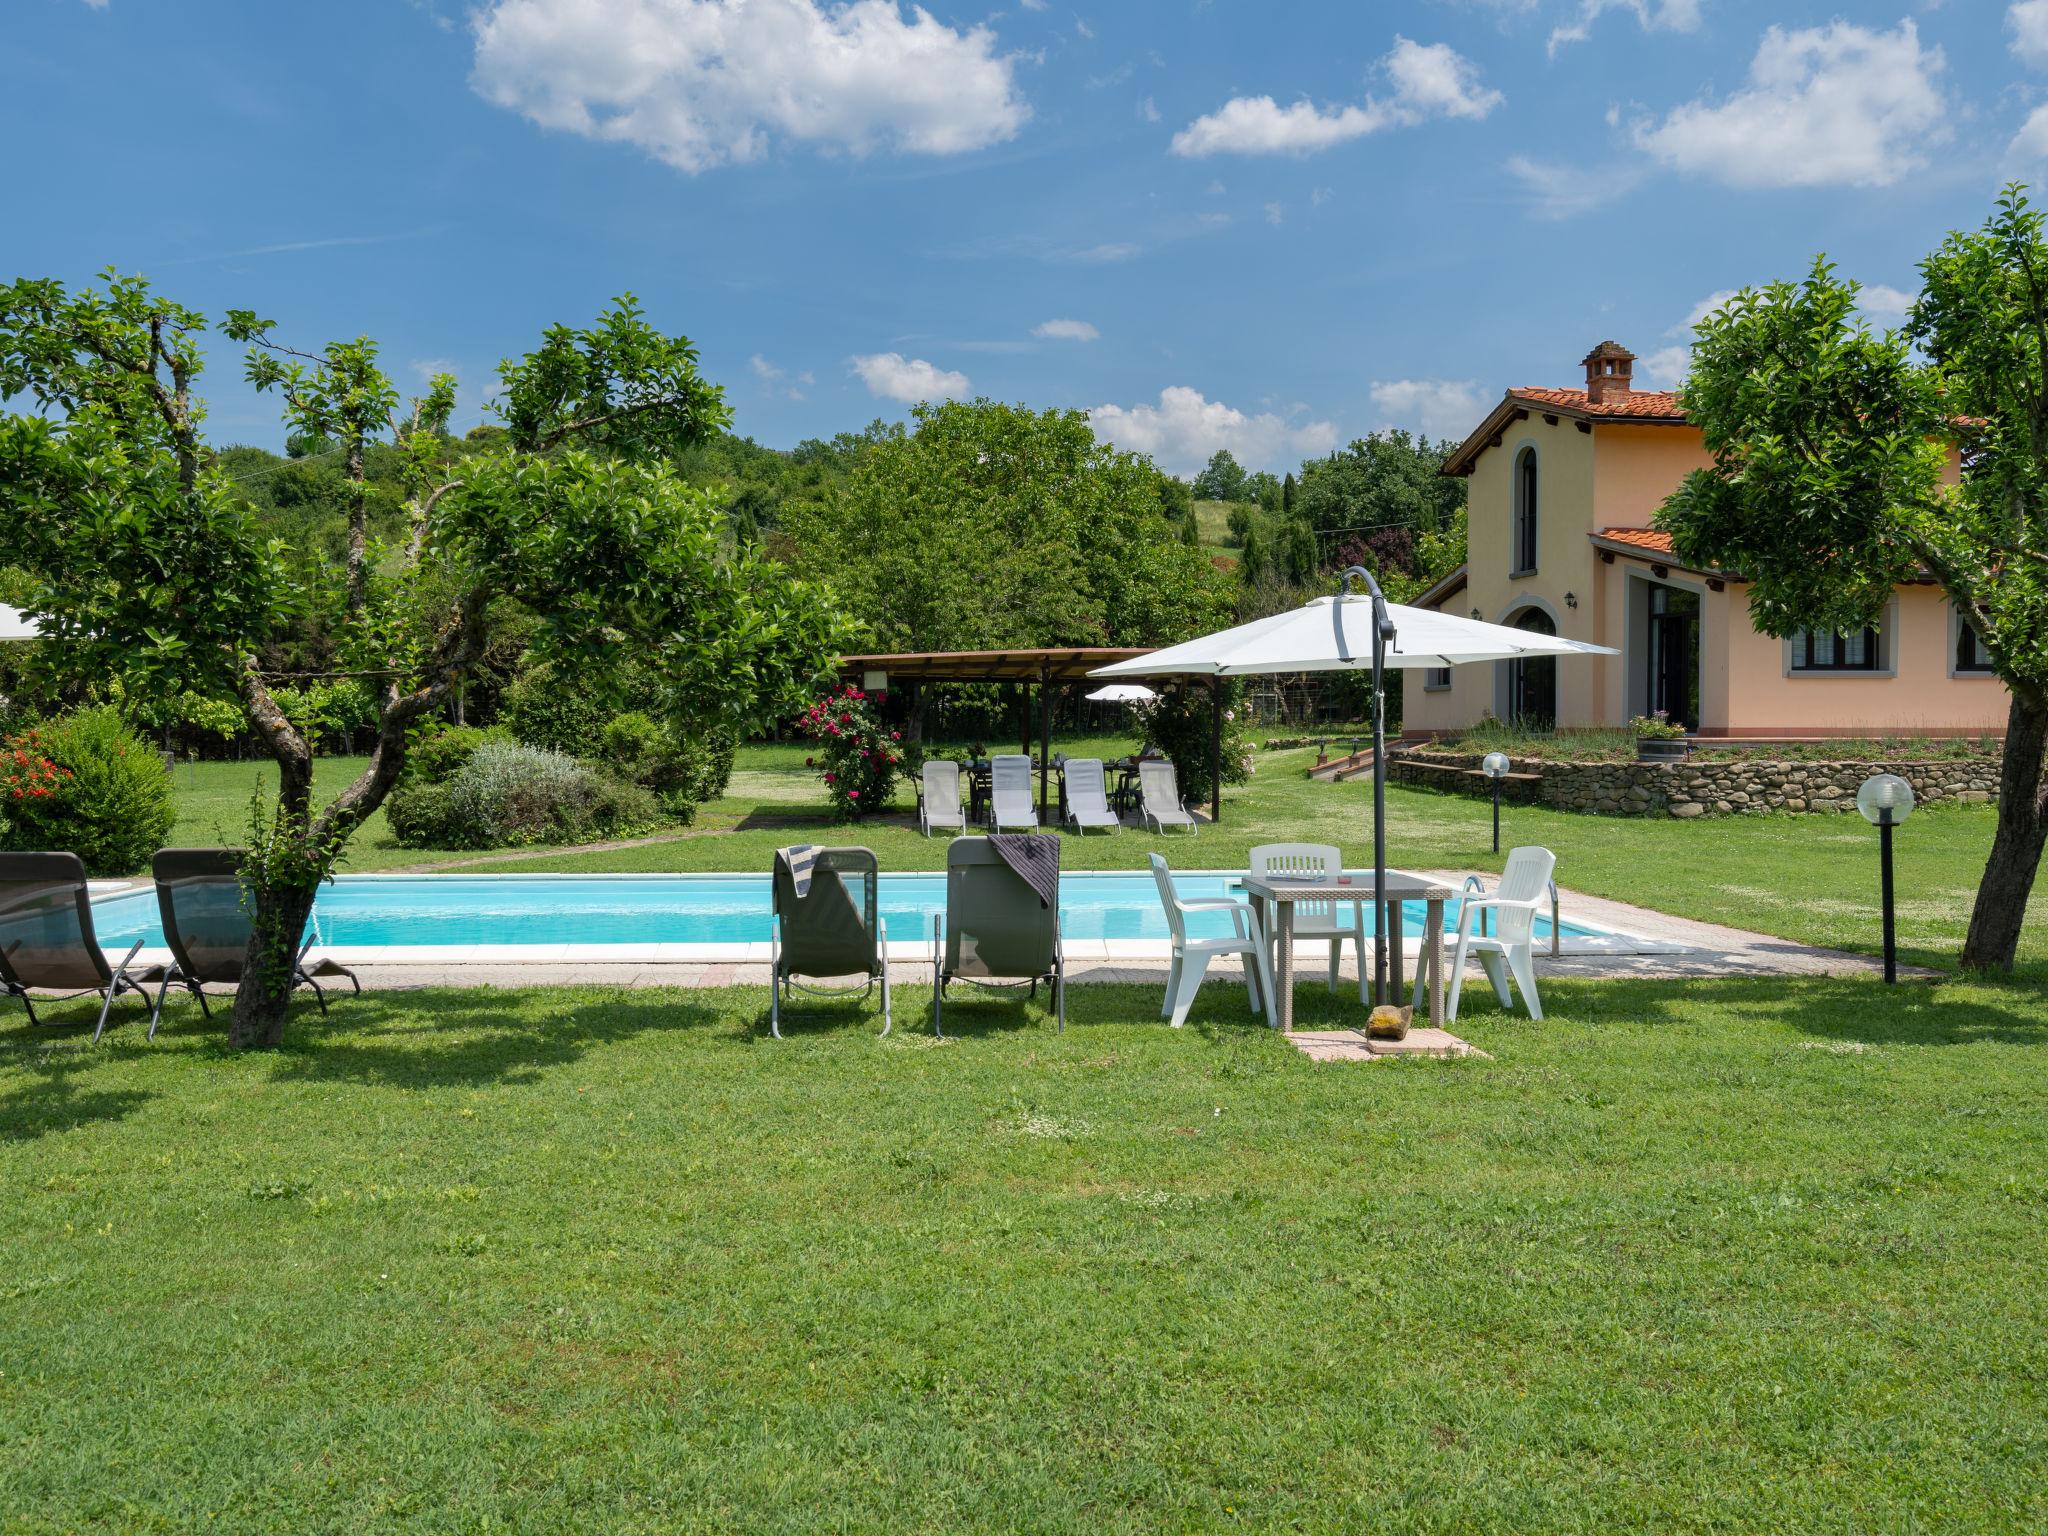 Photo 6 - 3 bedroom House in Terranuova Bracciolini with swimming pool and garden